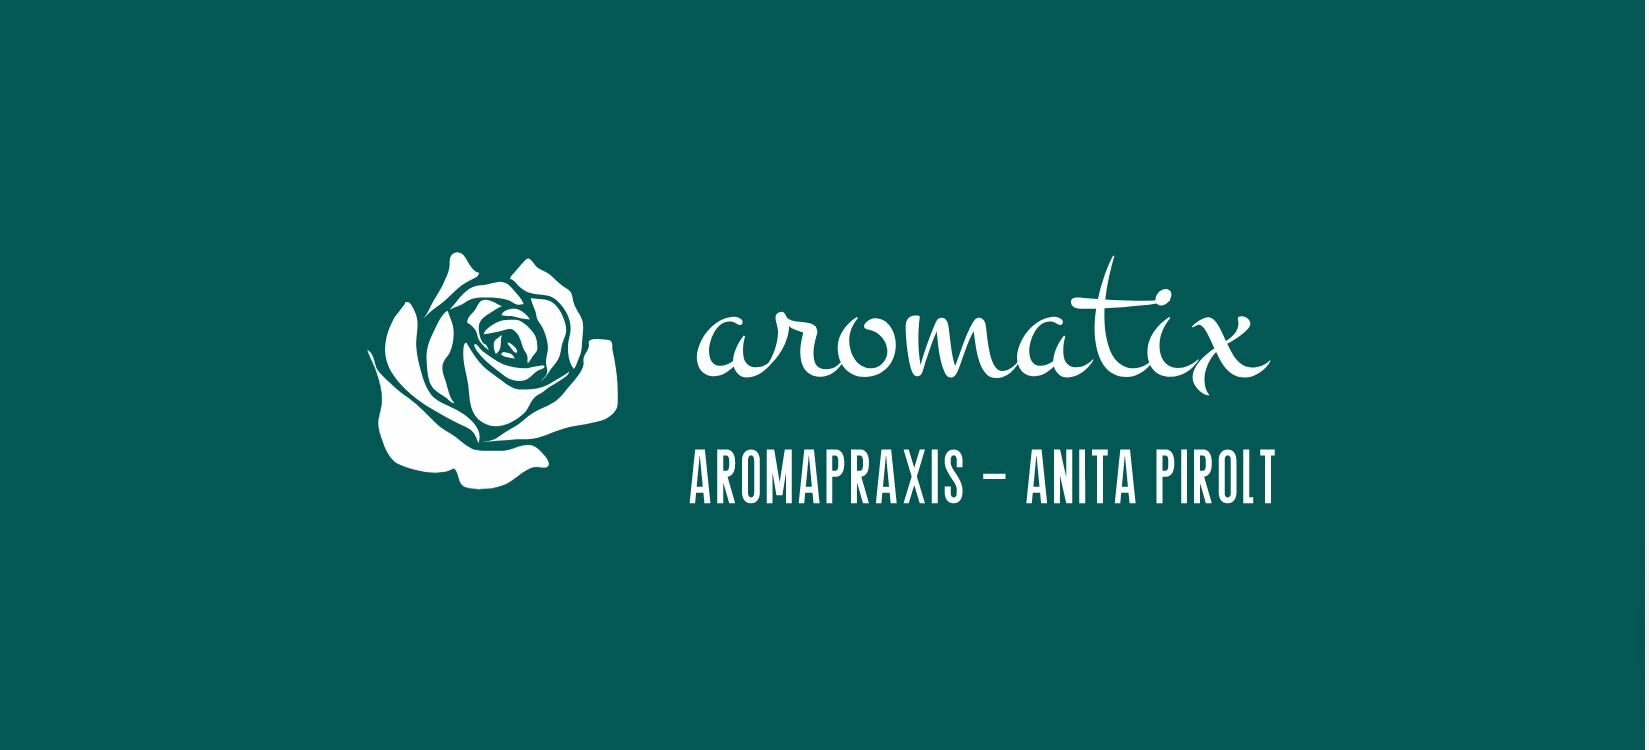 Aromapraxis – Anita Pirolt